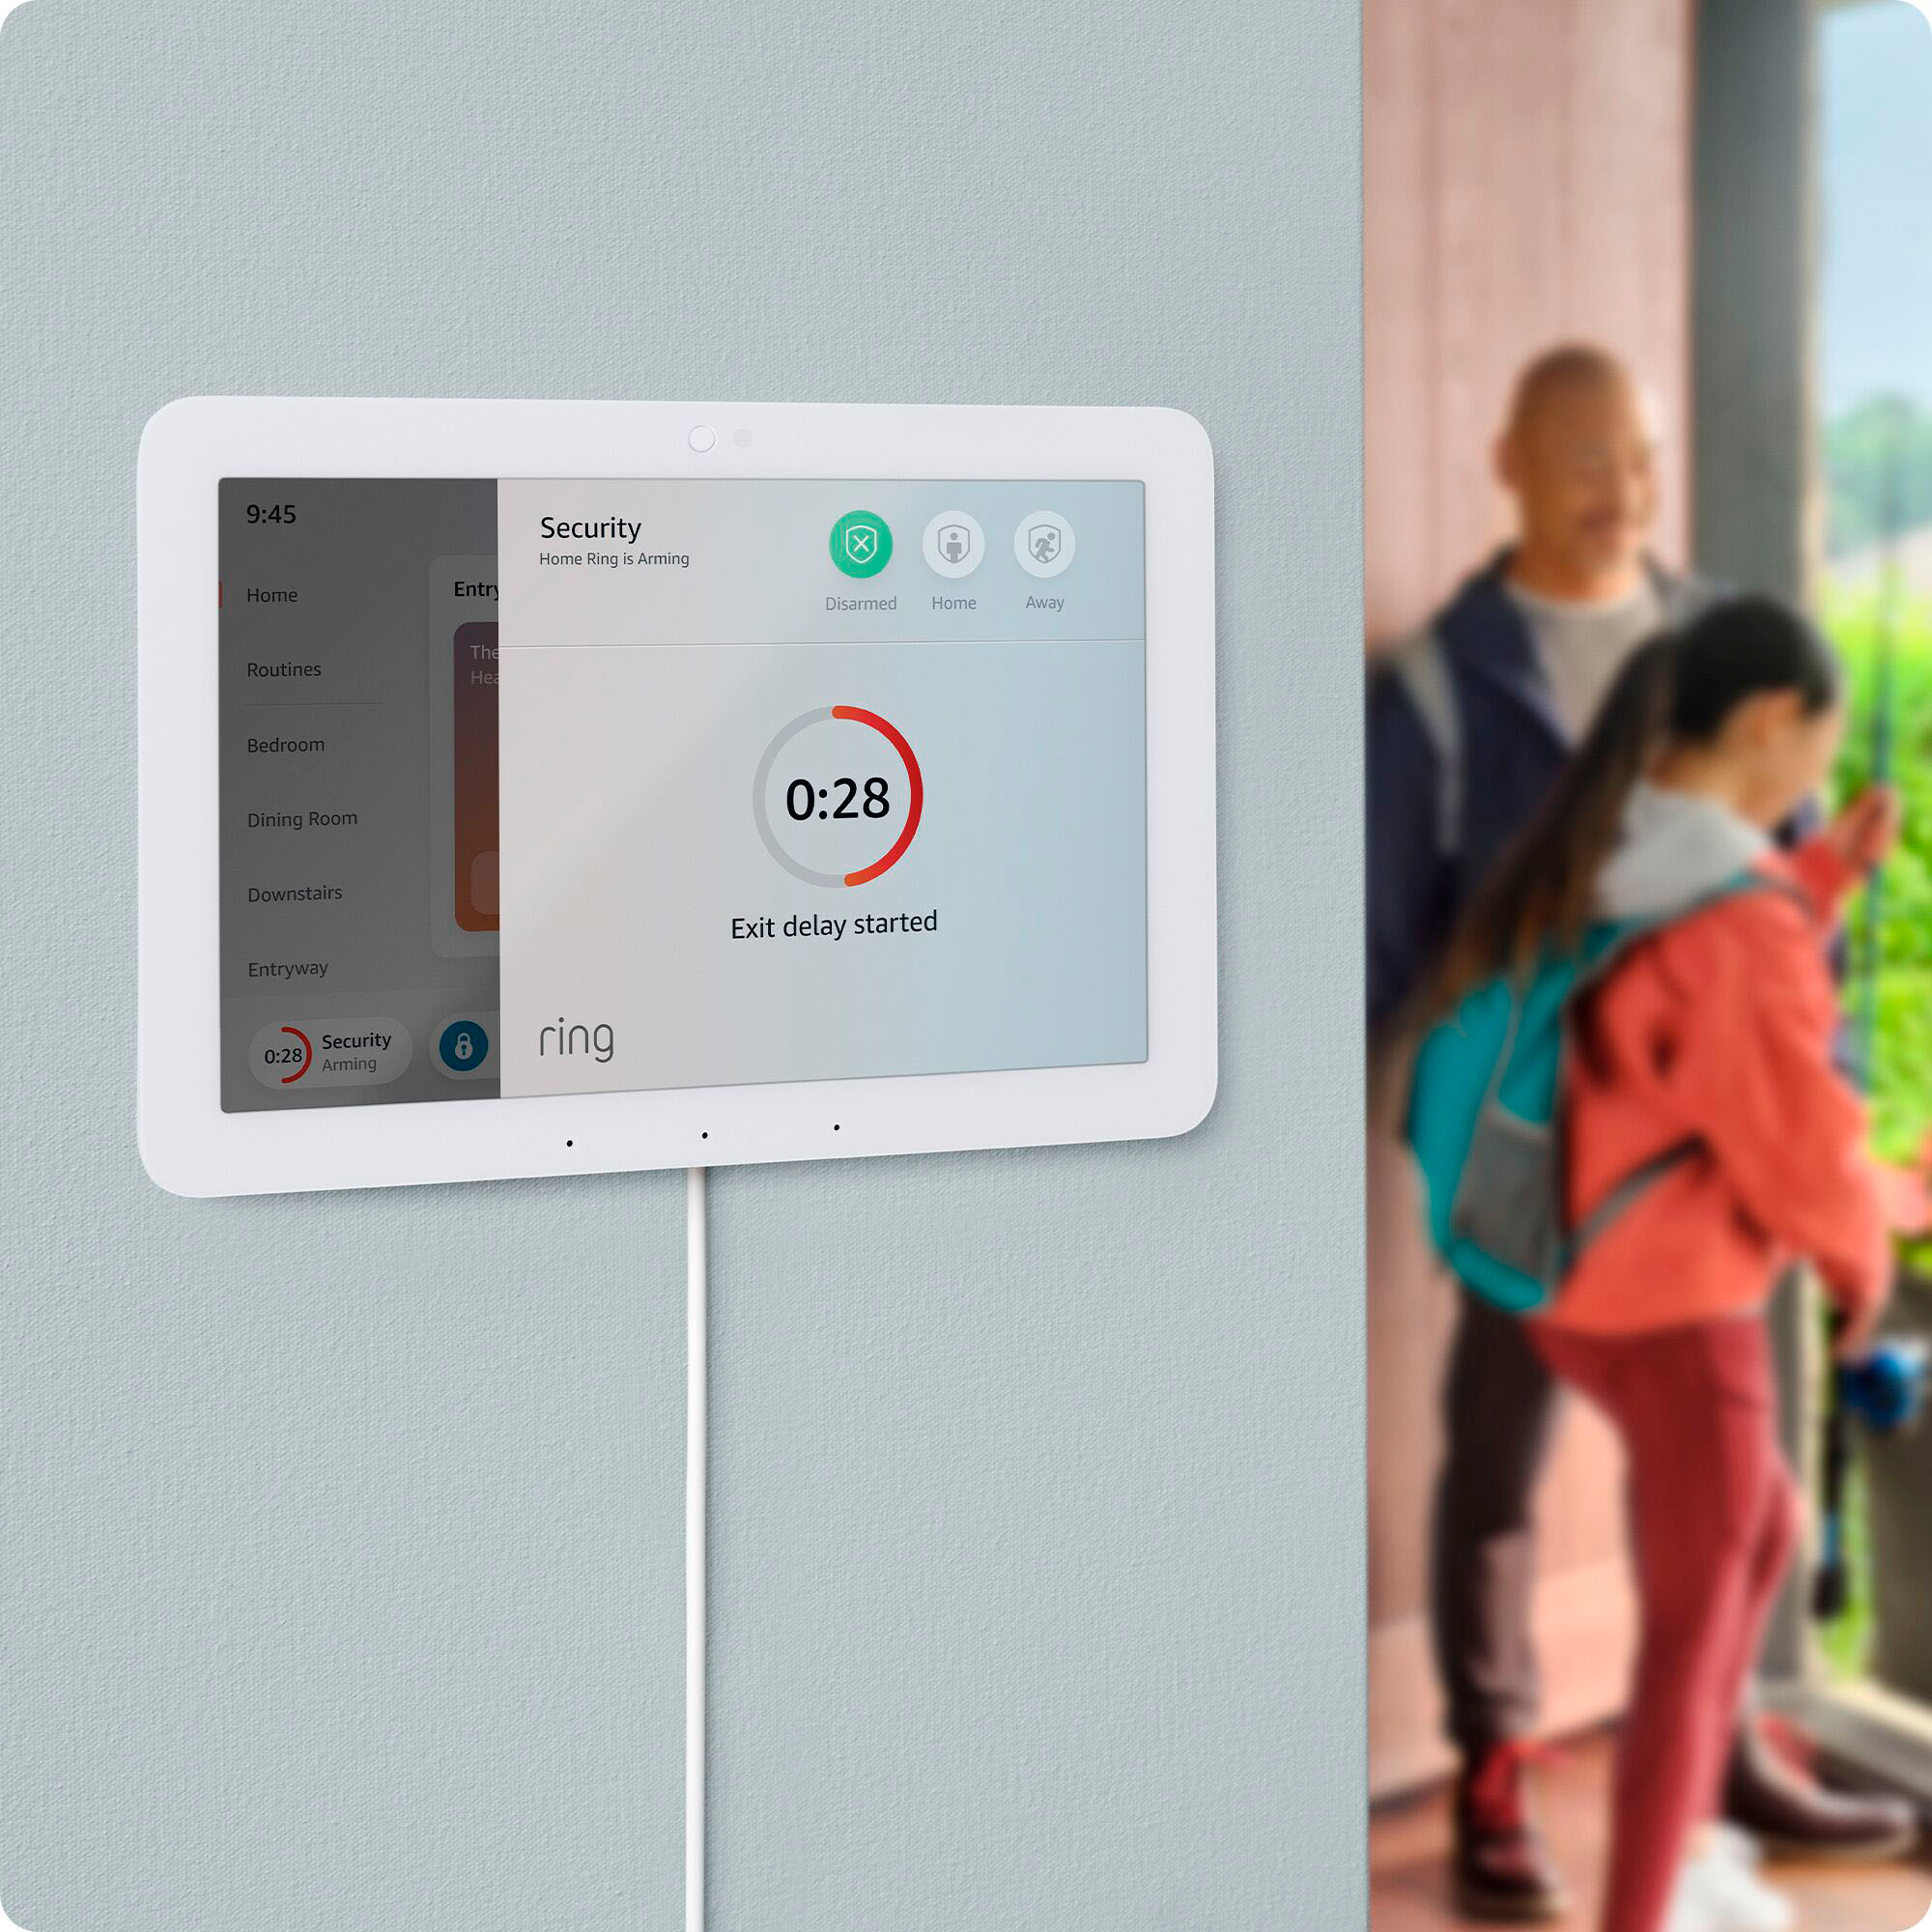 s Echo Hub is a wall-mountable smart home control panel